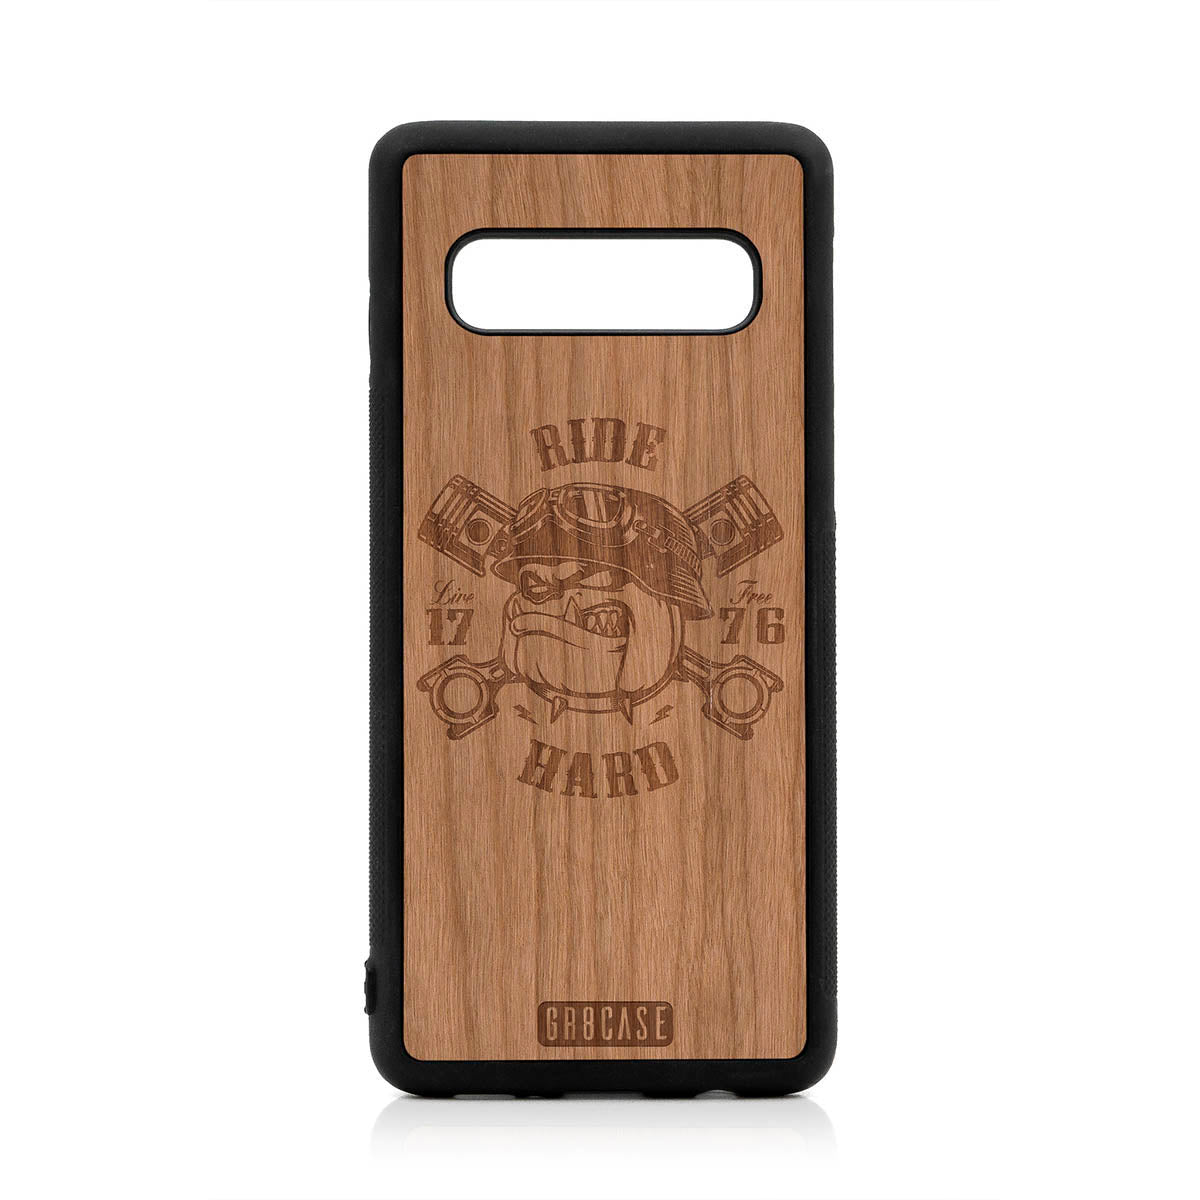 Ride Hard Live Free (Biker Dog) Design Wood Case For Samsung Galaxy S10 by GR8CASE